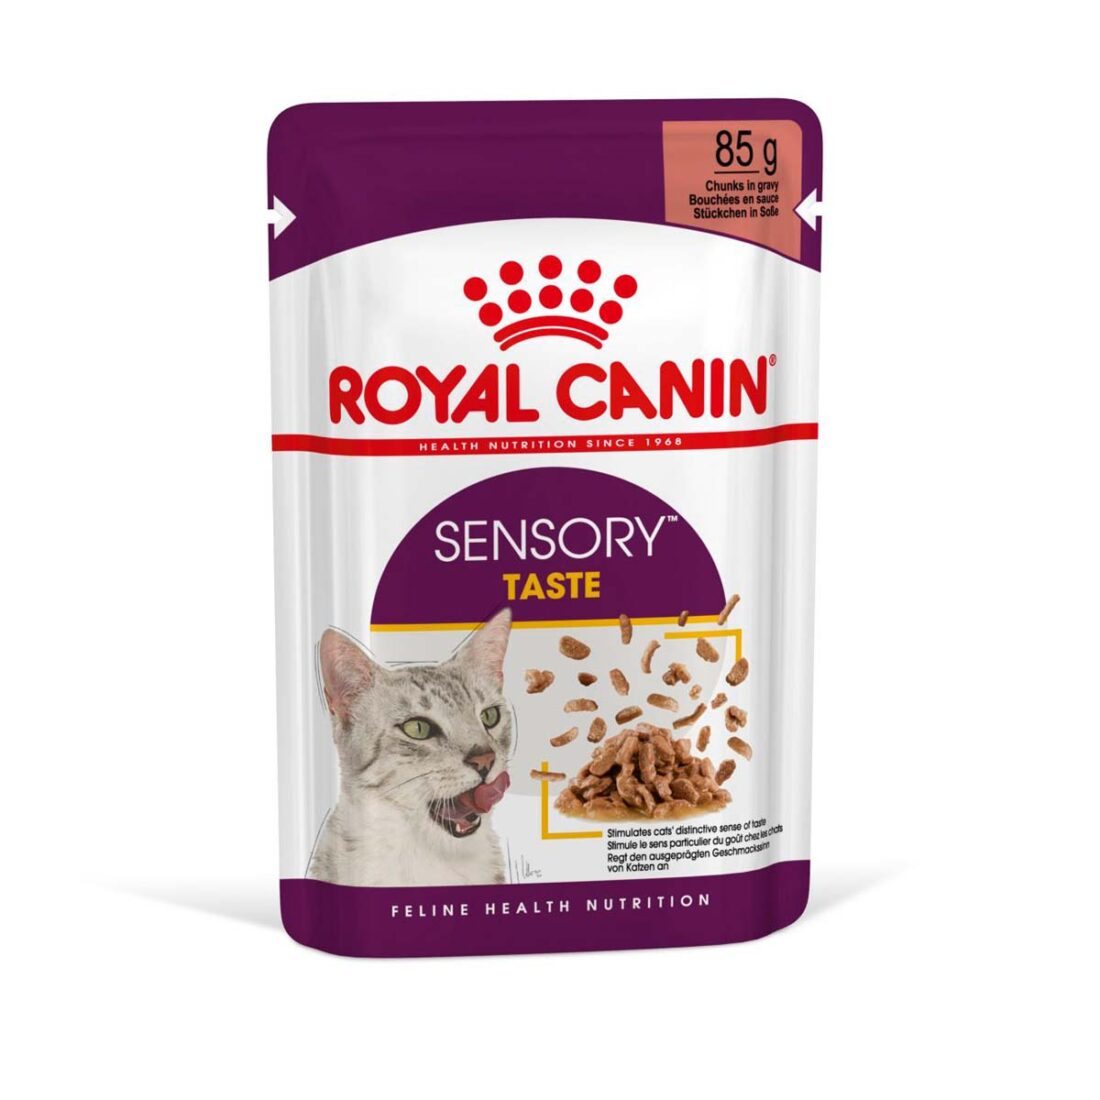 Royal Canin Sensory Taste Gravy 48